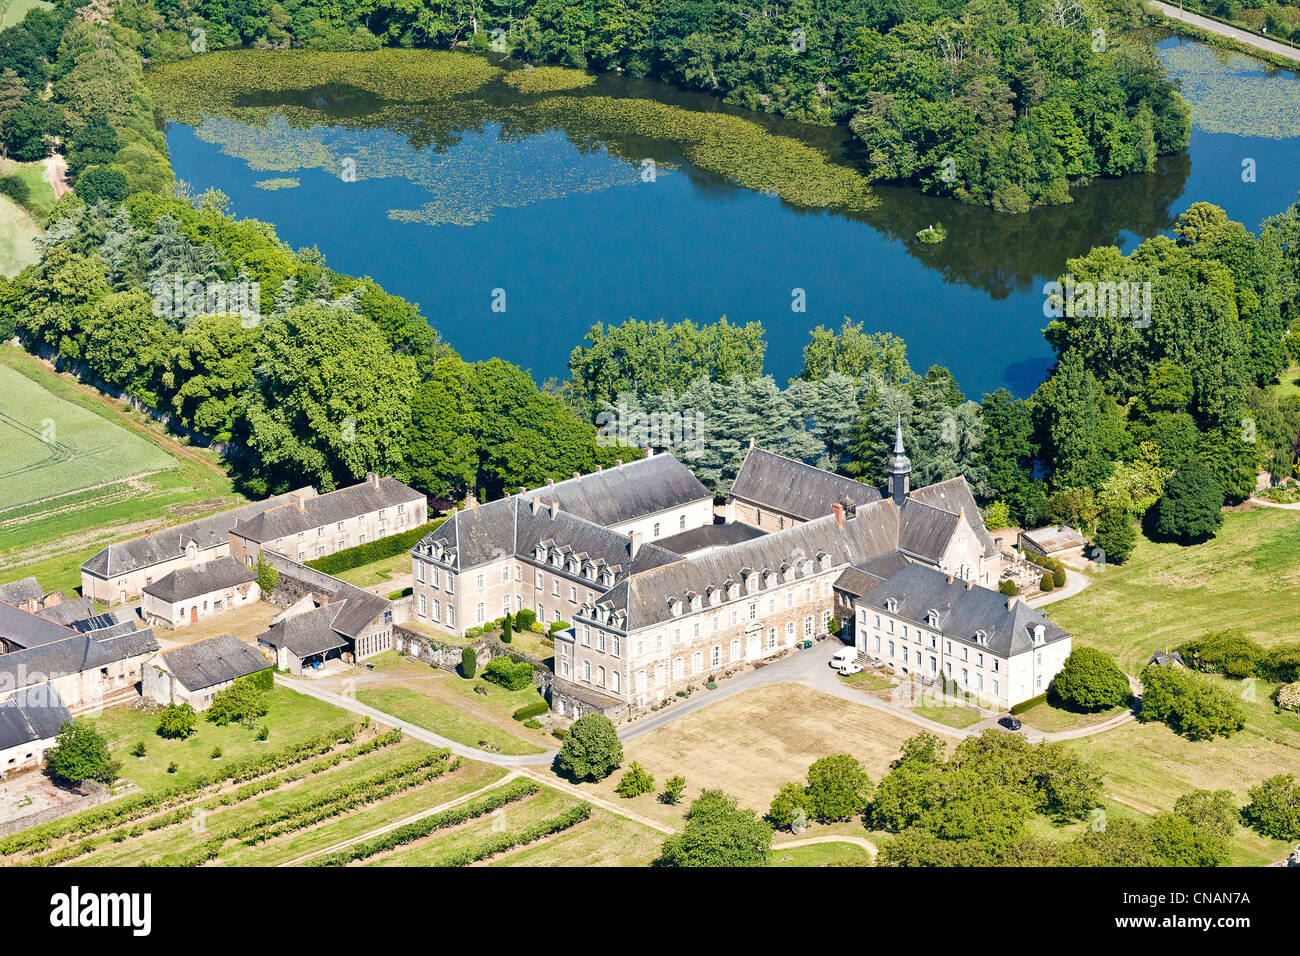 France, Loire-Atlantique, La Meilleraye de Bretagne, Melleray abbay established in 1145 (aerial photography) Stock Photo